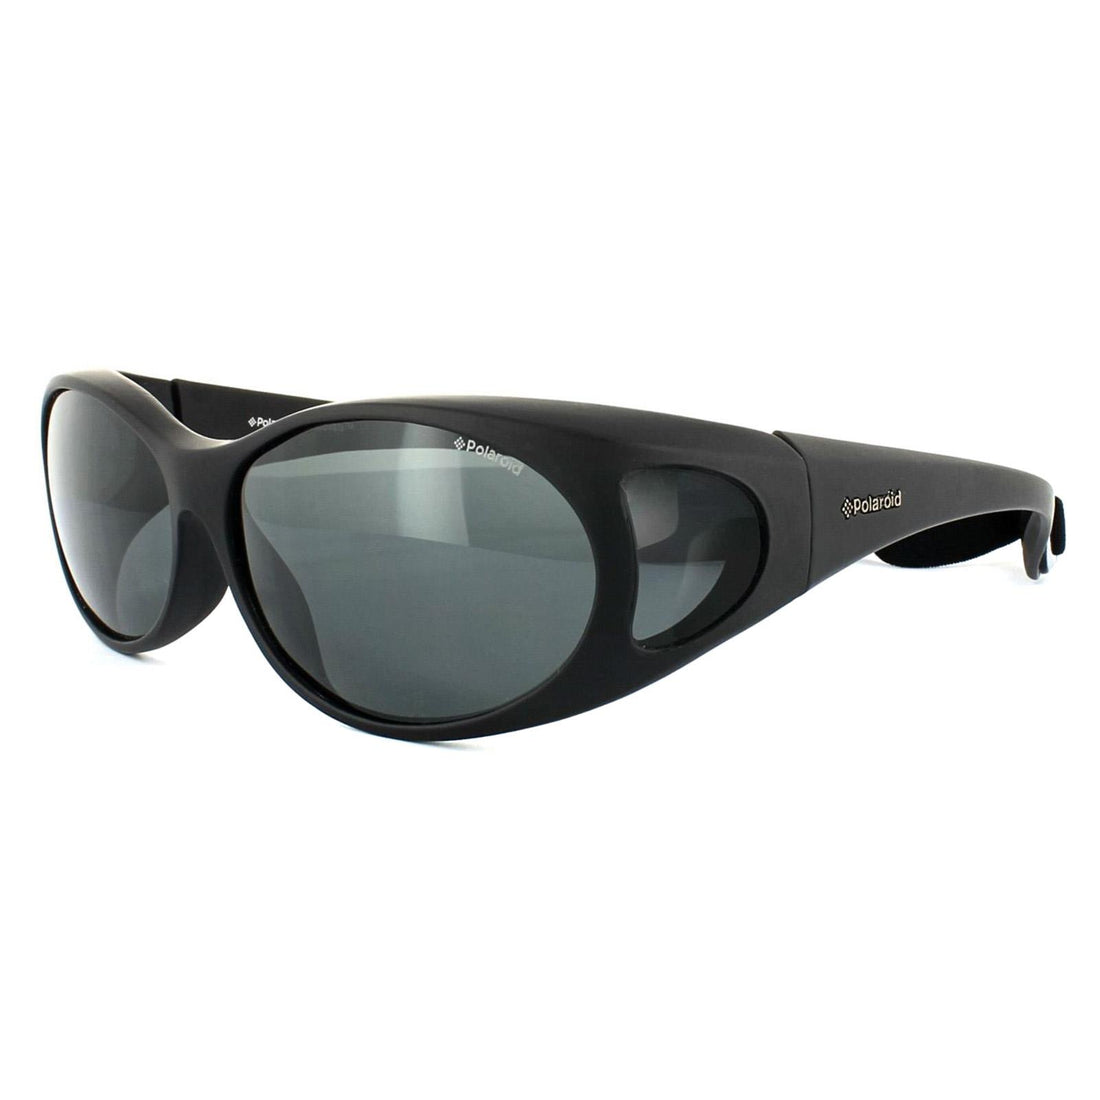 Polaroid Suncovers Fitover Sunglasses P8900 KIH Y2 Black Grey Polarized